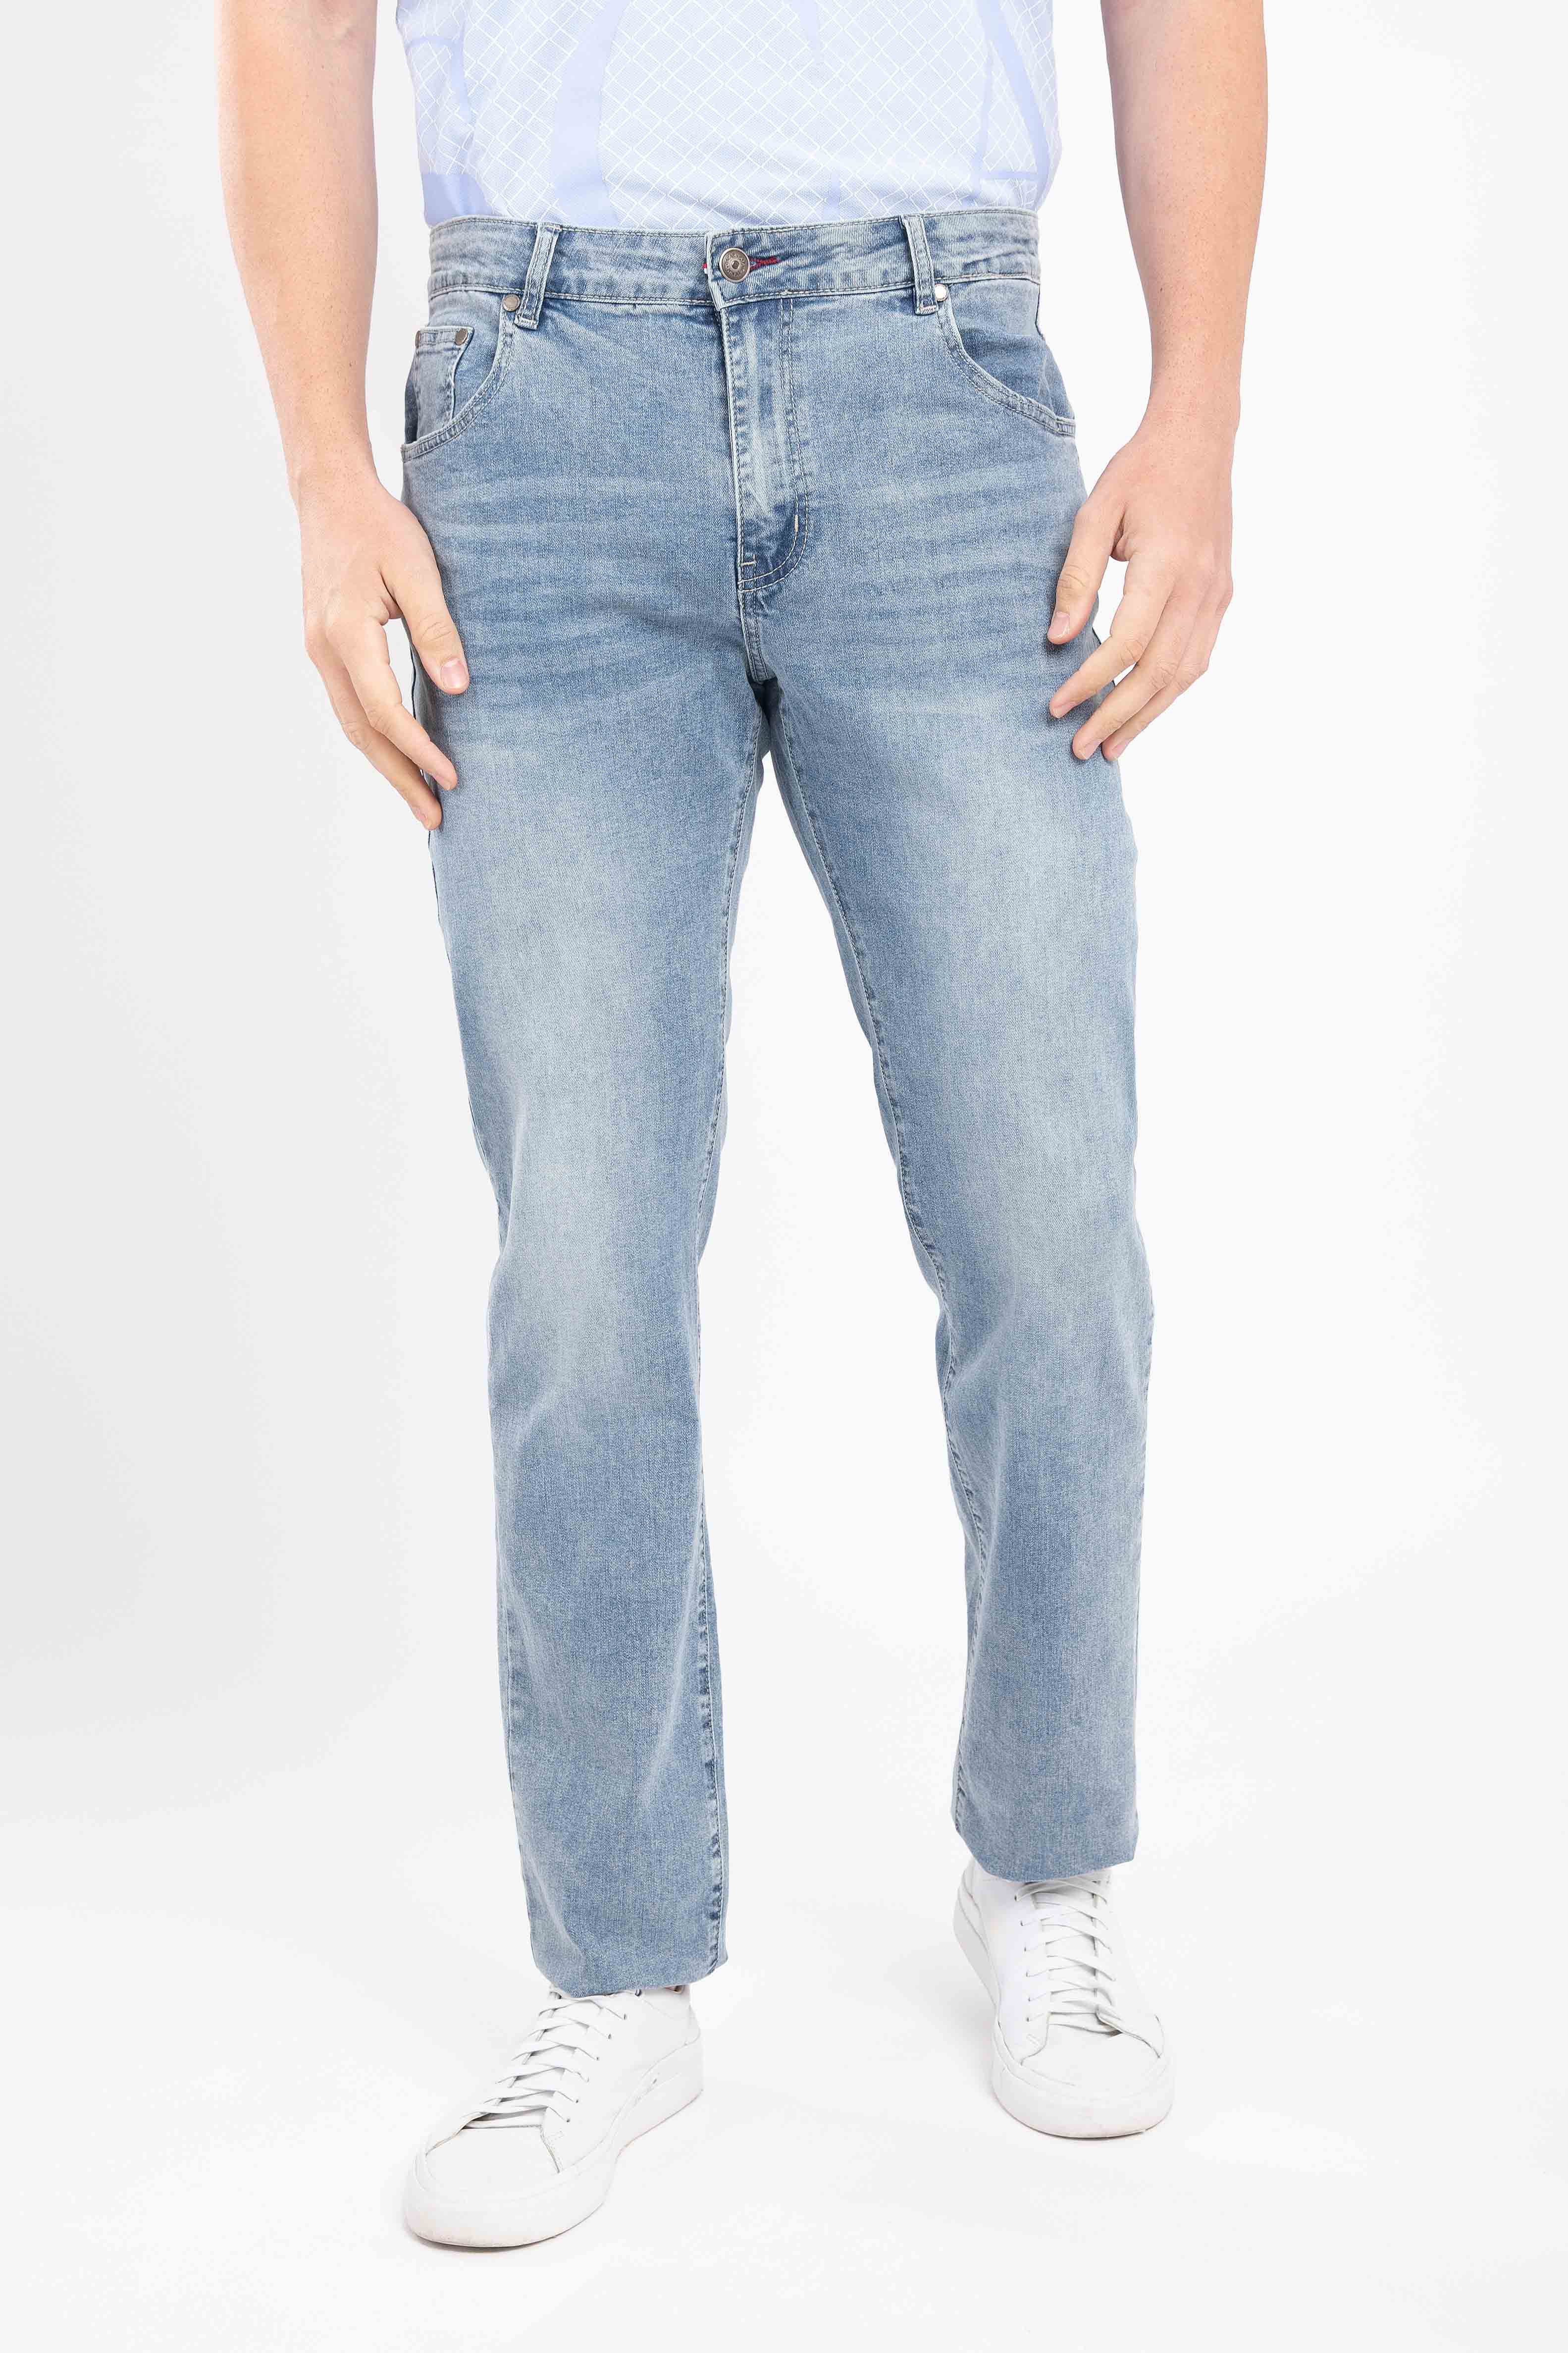 pantalones-jeans-oscar-de-la-renta-p-caballeros